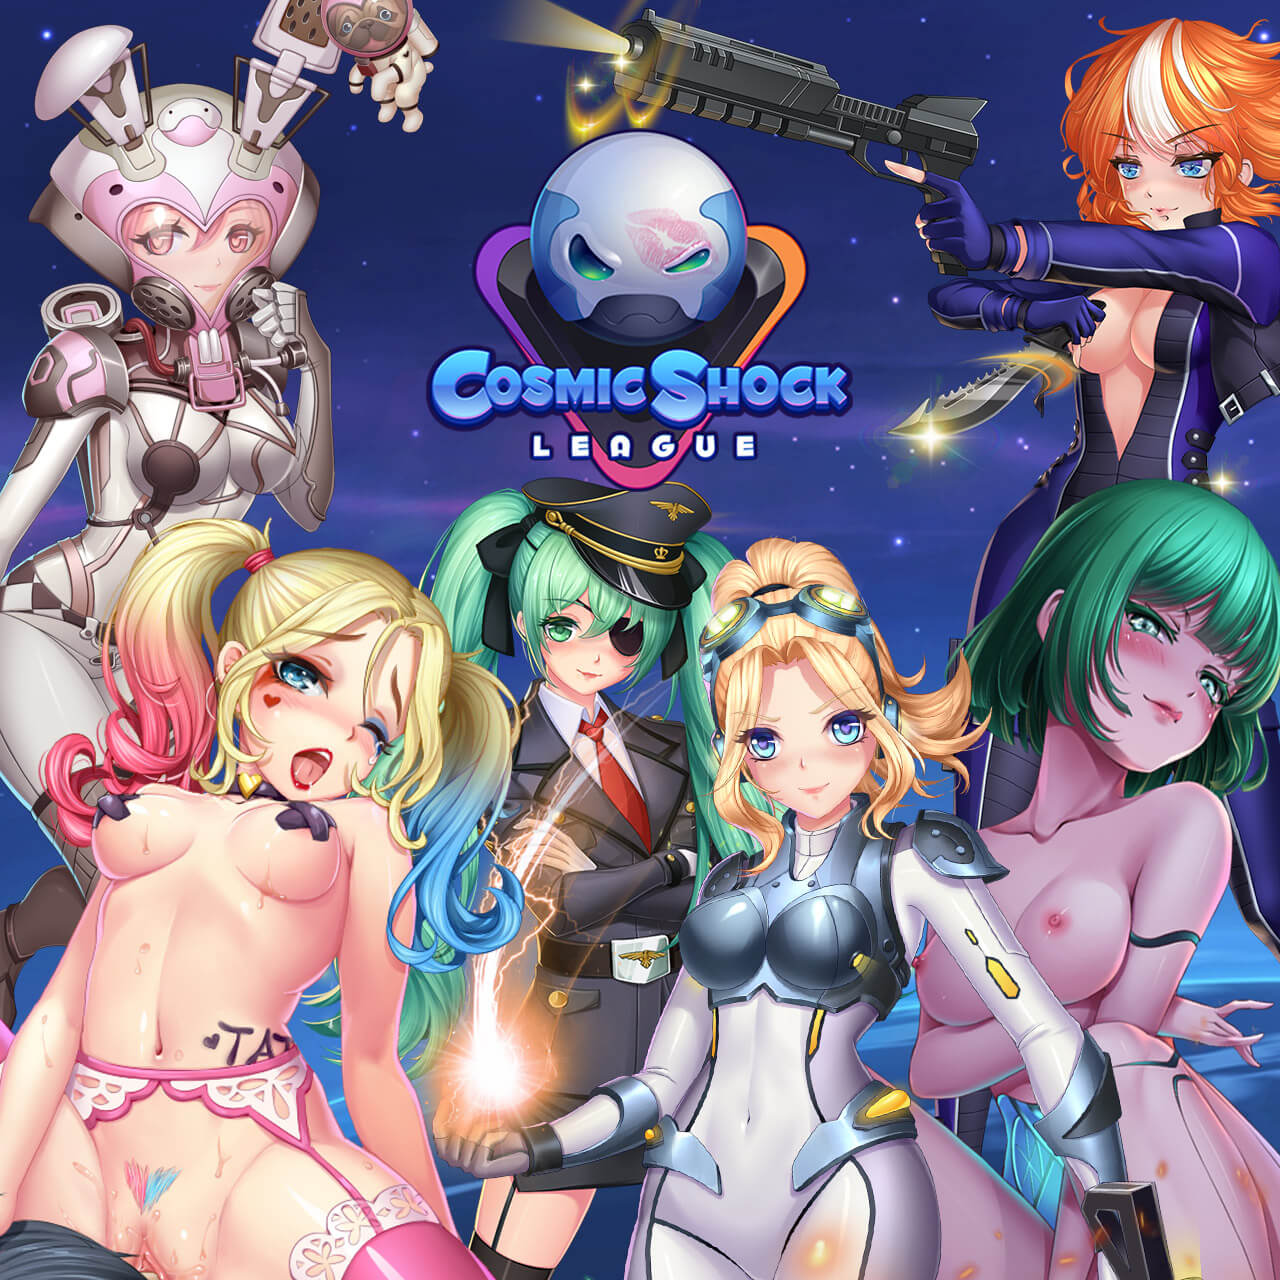 Xxx Shkc - Cosmic Shock League - Puzzle Sex Game | Nutaku